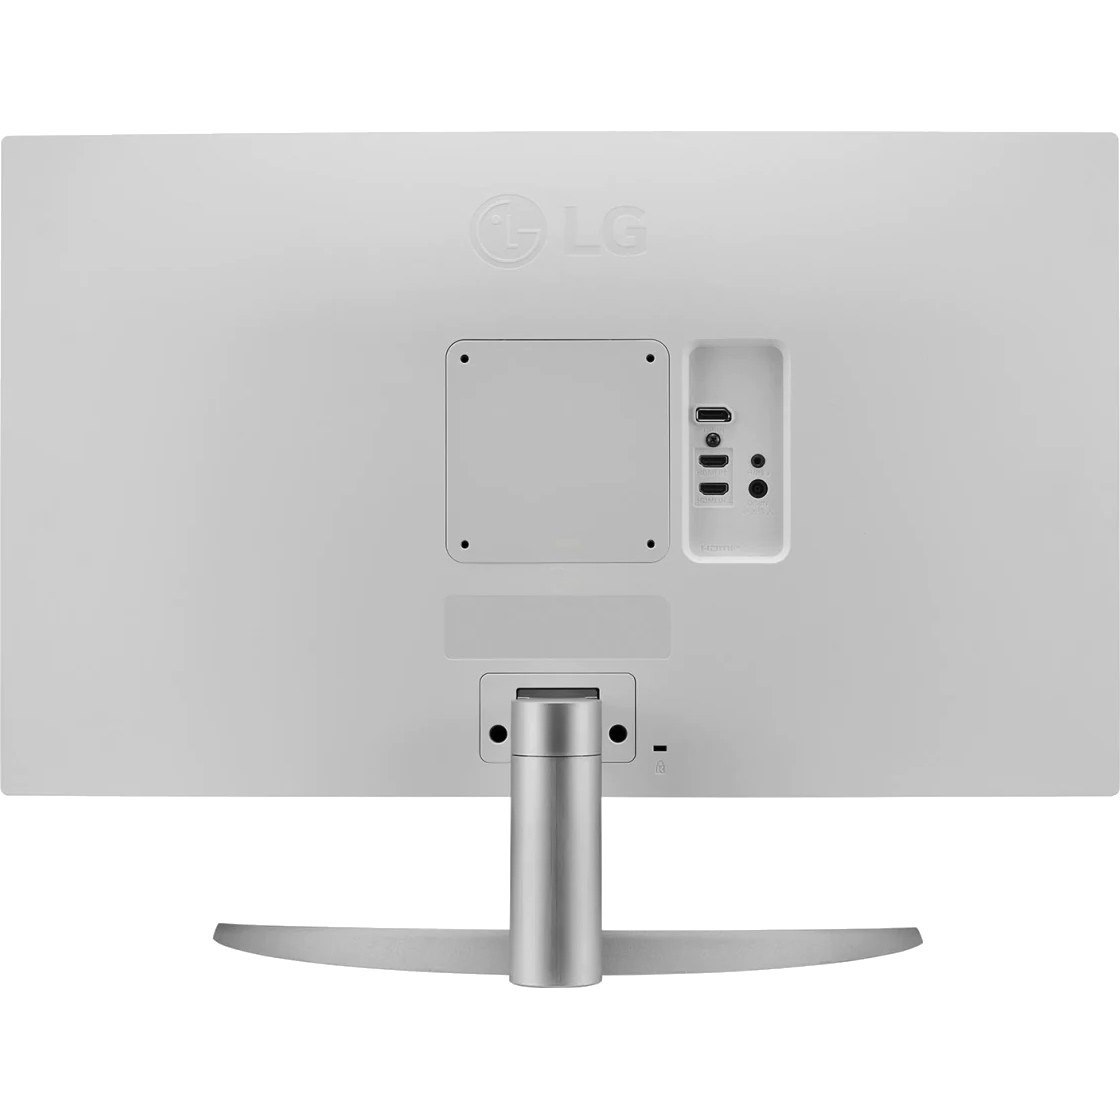 LG 27UP600-W 27" Class 4K UHD LCD Monitor - 16:9 - White